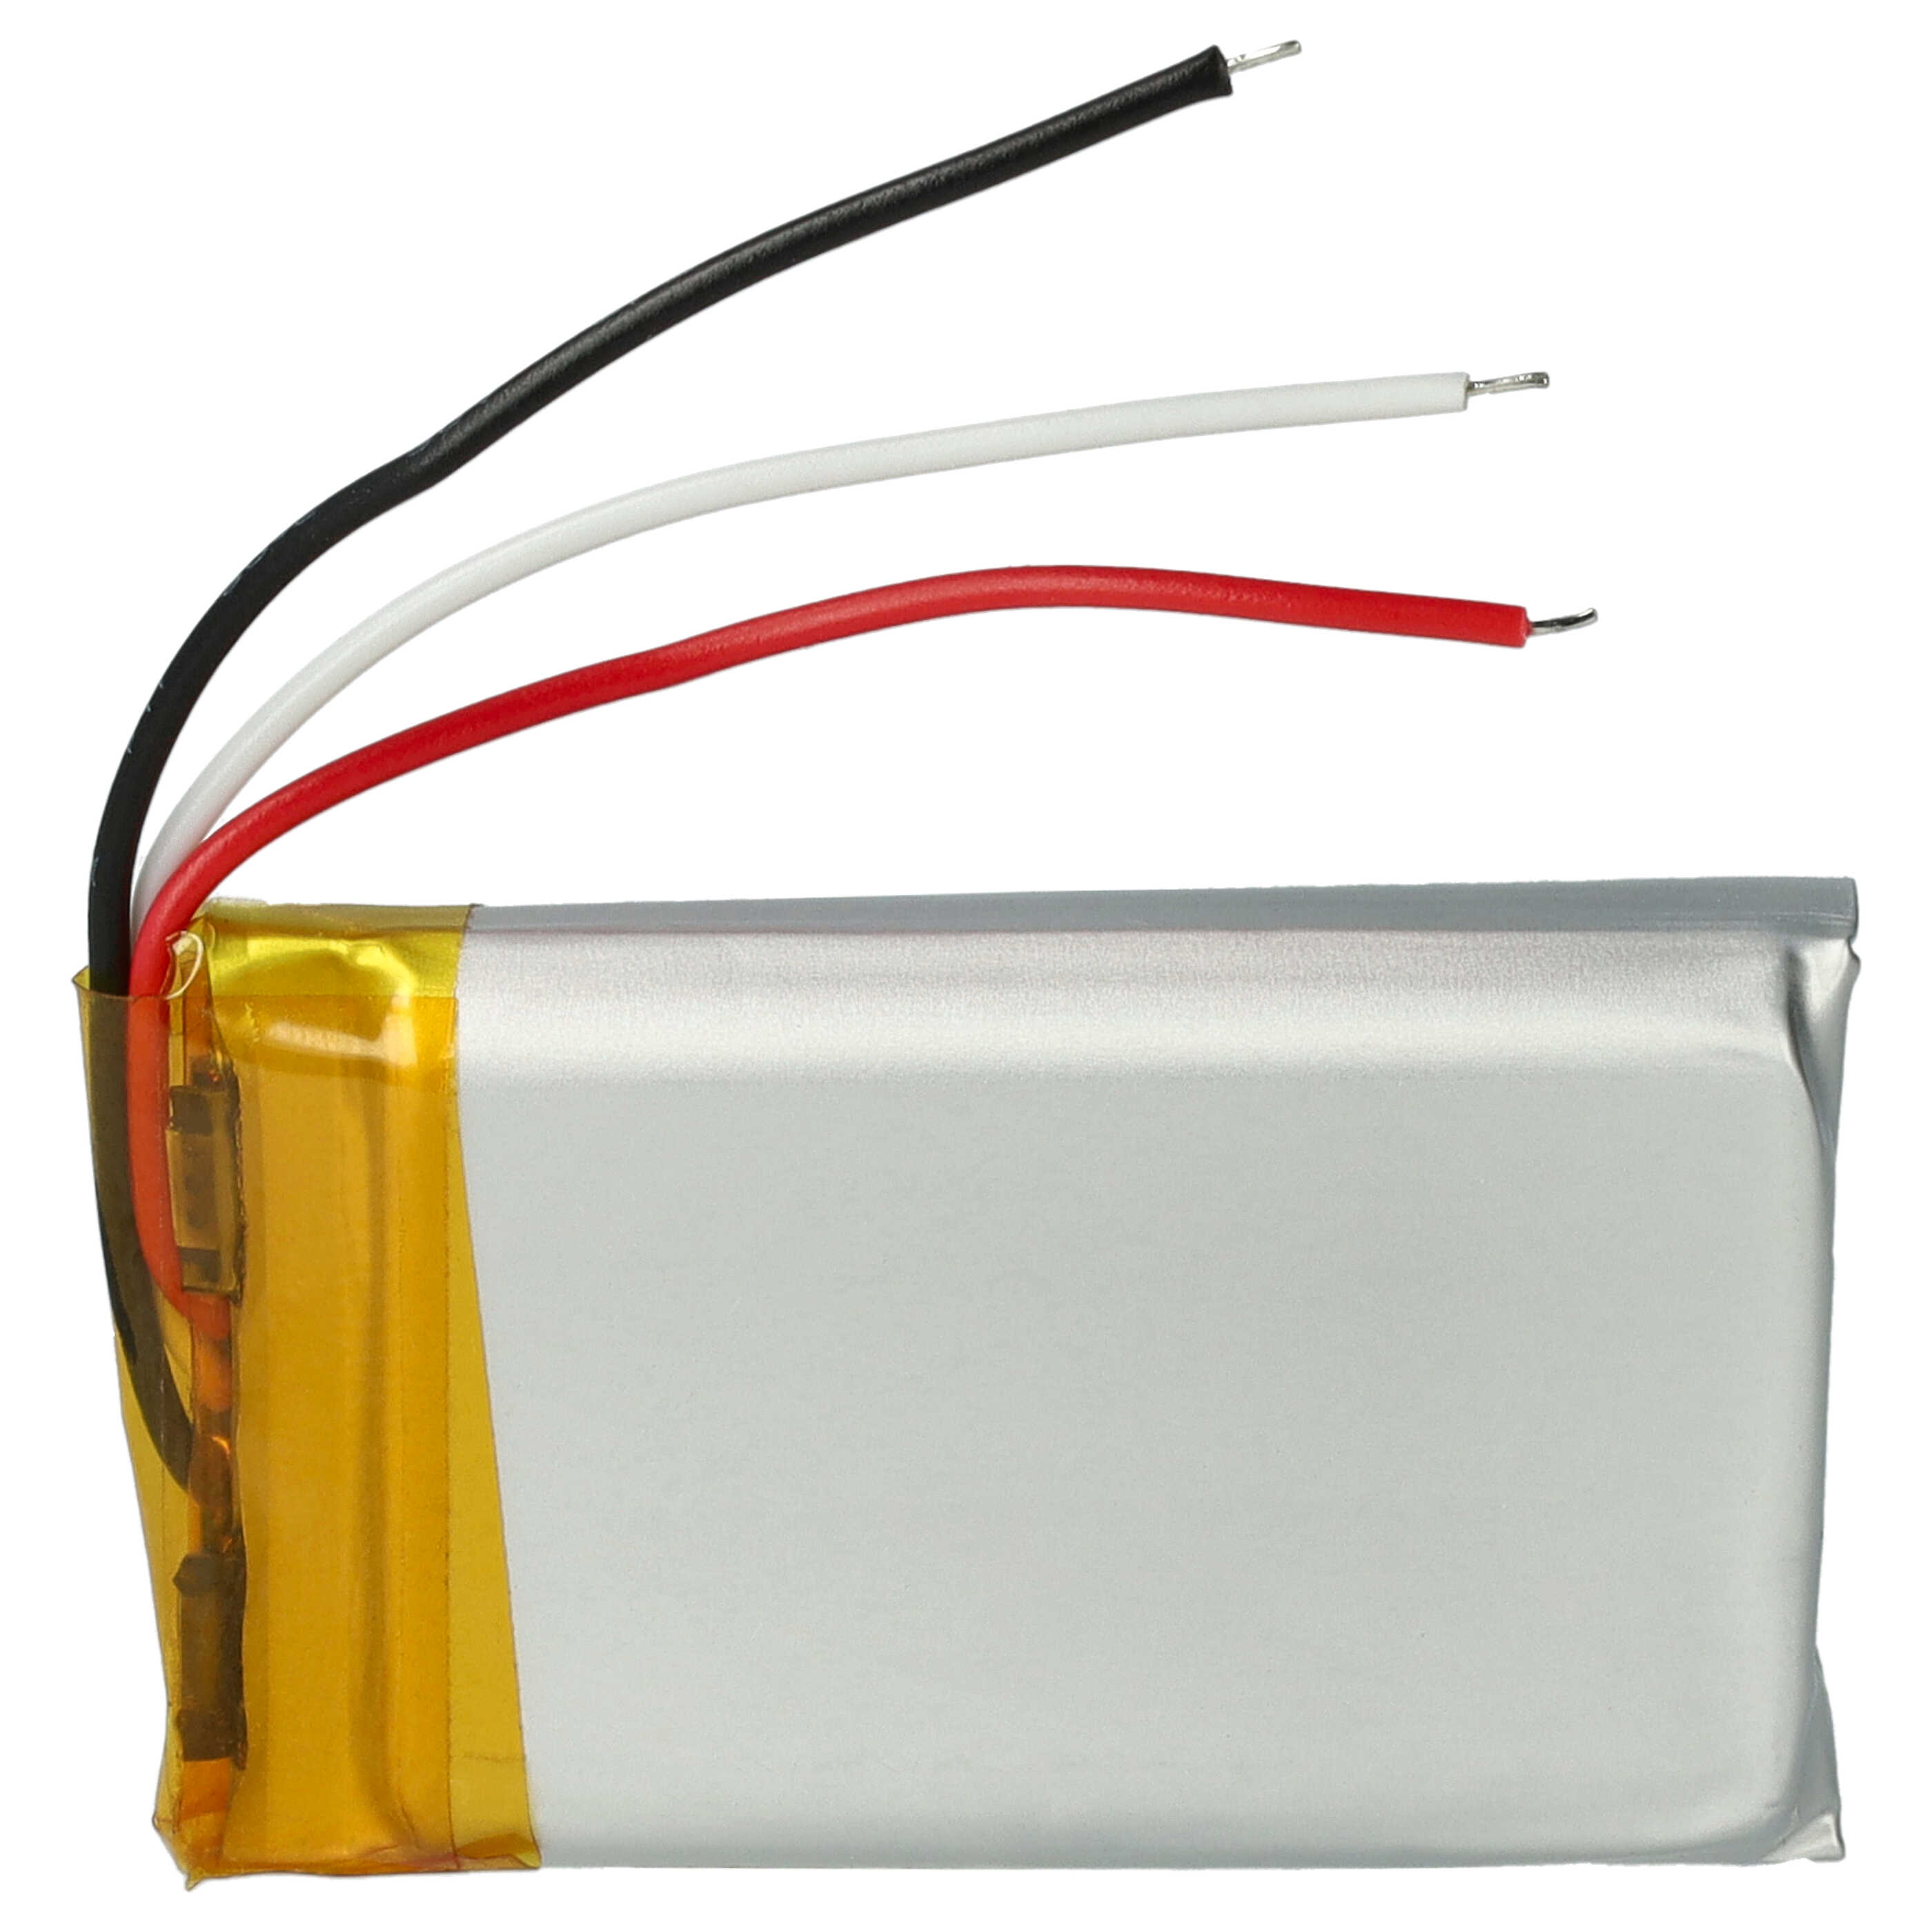 Akumulator do słuchawek bezprzewodowych zamiennik Bang & Olufsen 643826, 1643874 - 600 mAh 3,7 V LiPo